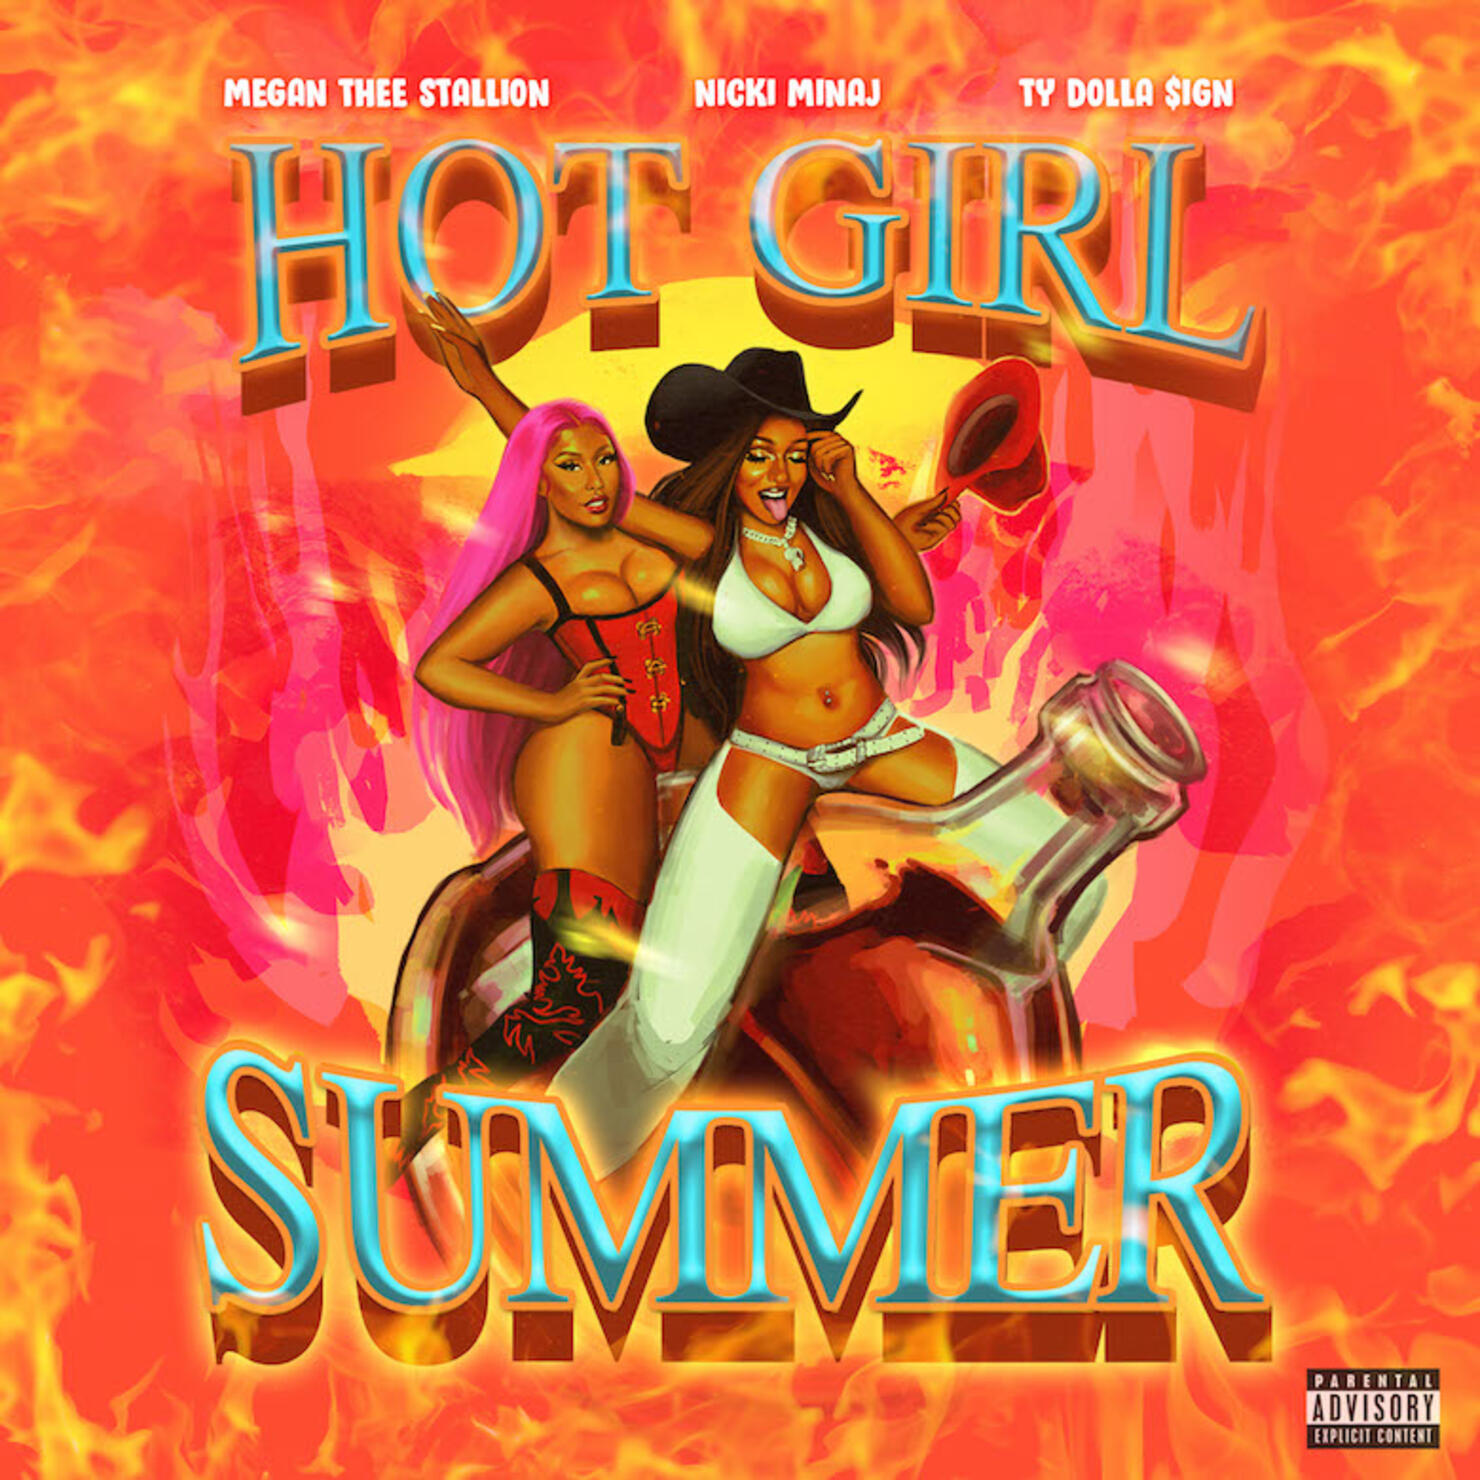 Megan Thee Stallion - "Hot Girl Summer" featuring Nicki Minaj & Ty Dolla $ign